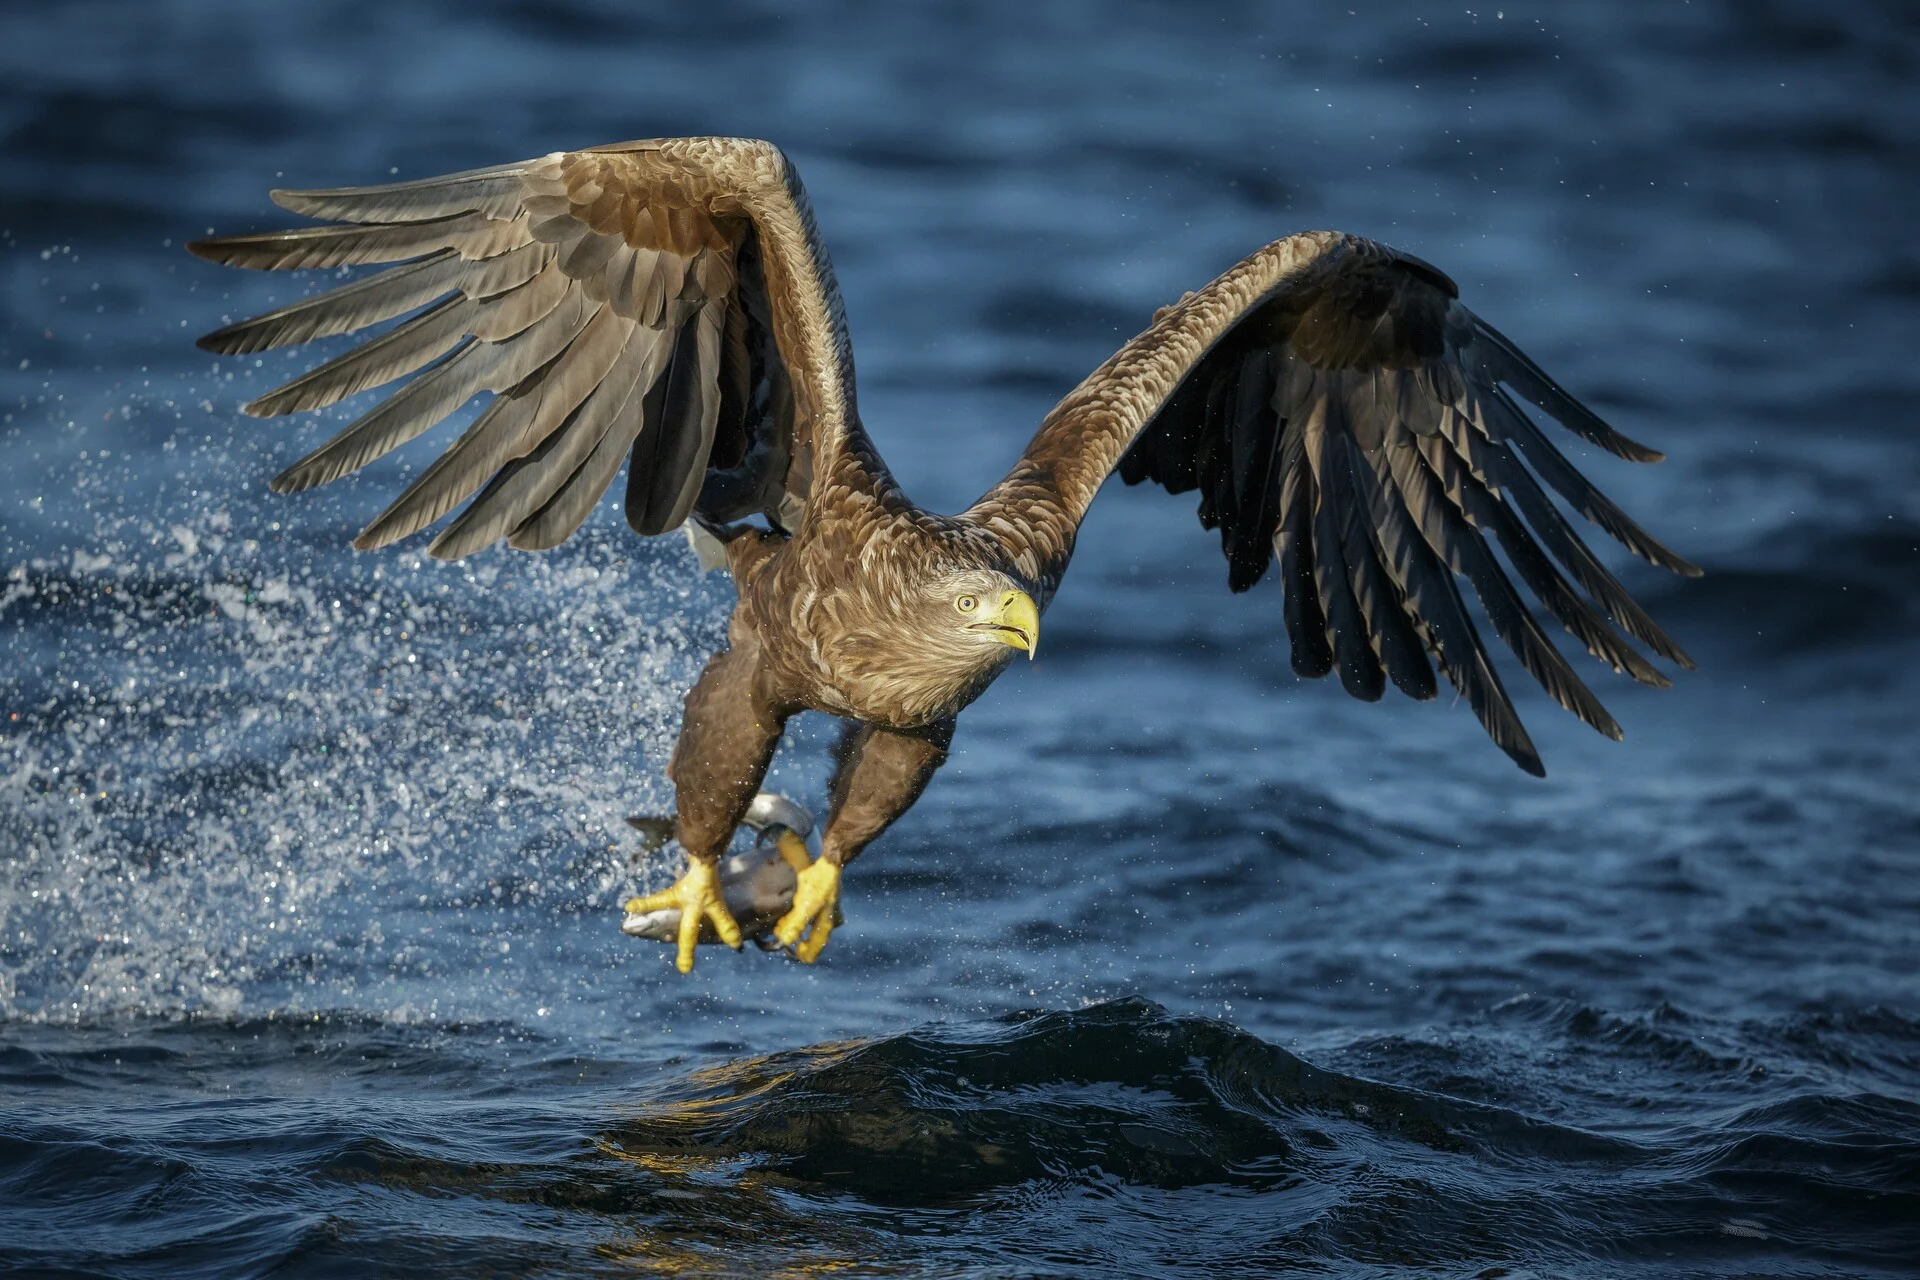 sea-eagle-lofoten-neil-burton-gettyimages-465890034-19733328-photo getty images 1920